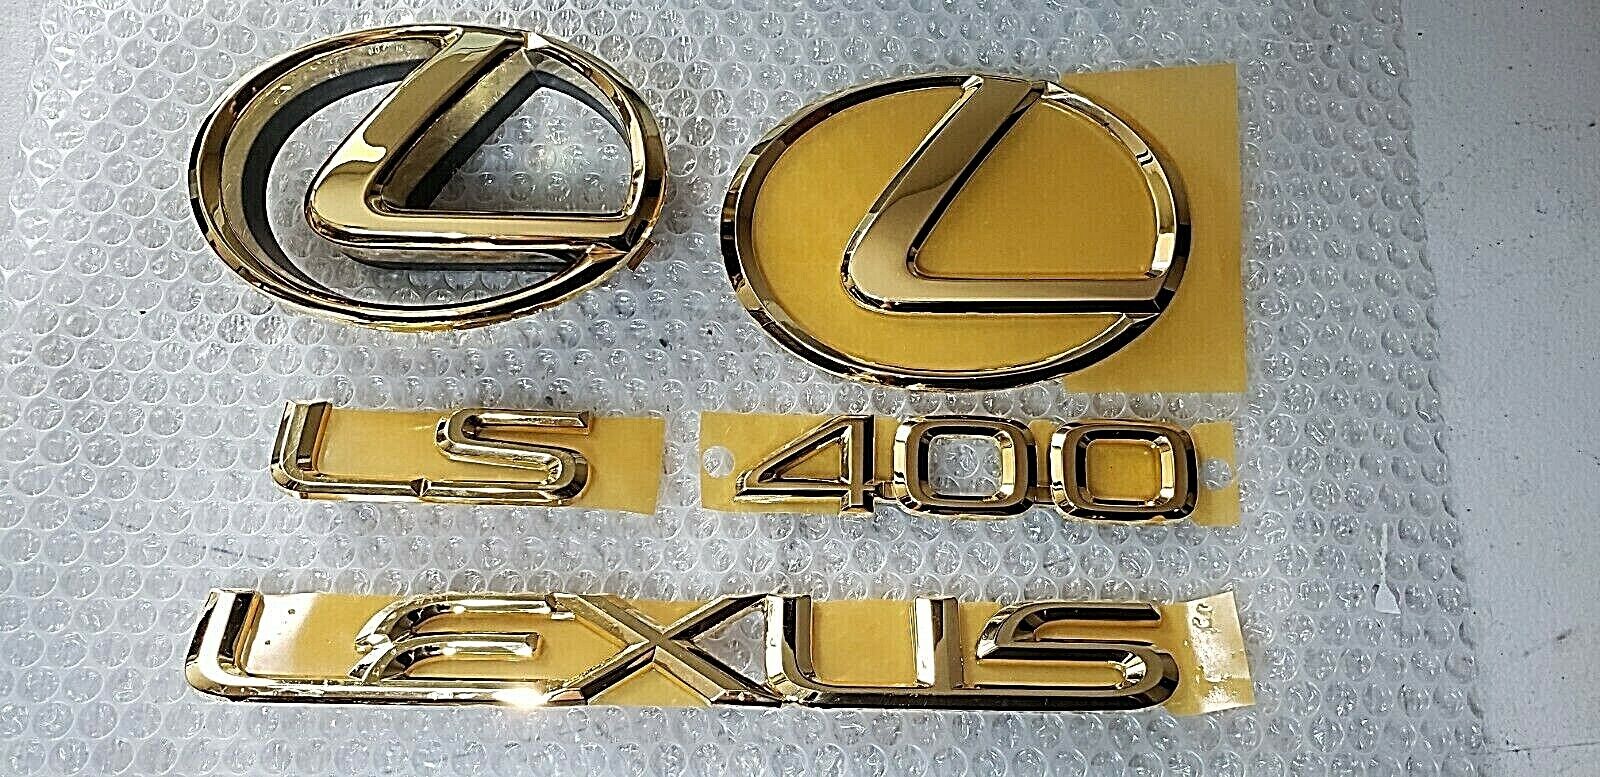 95-00 FITS New Lexus LS400 COMPLETE Emblem Front Rear Trunk KIT Word 24K GOLD